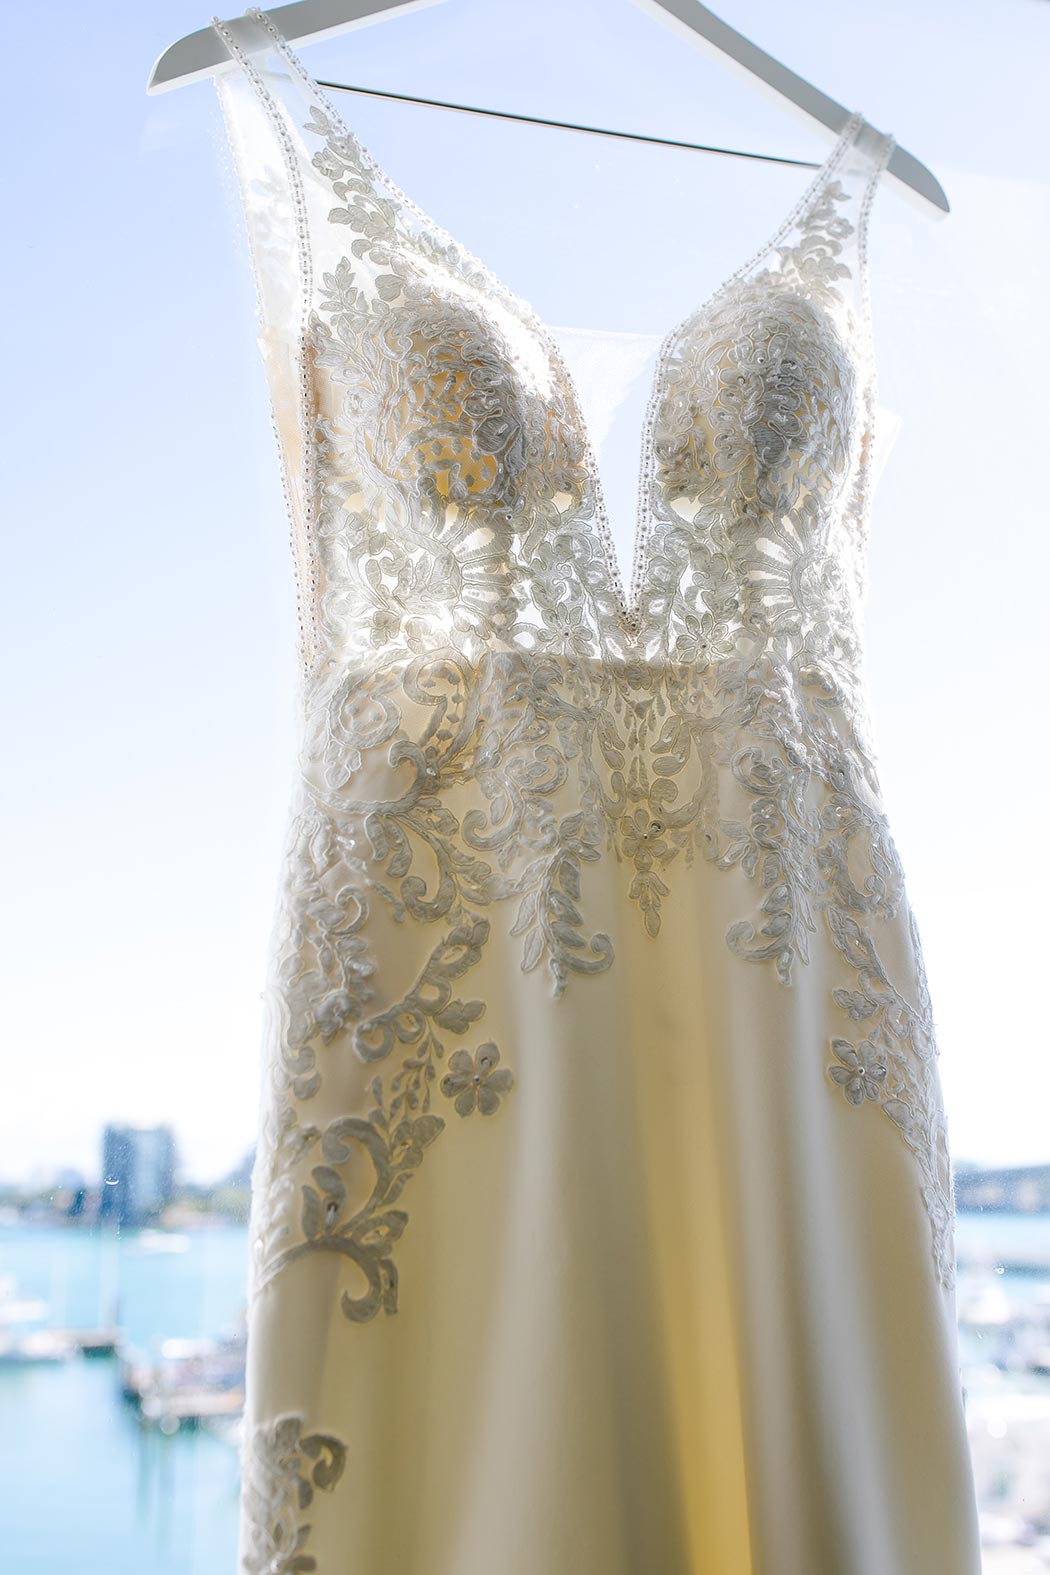 wedding dress photographed on window. coral gables congregational church wedding dress